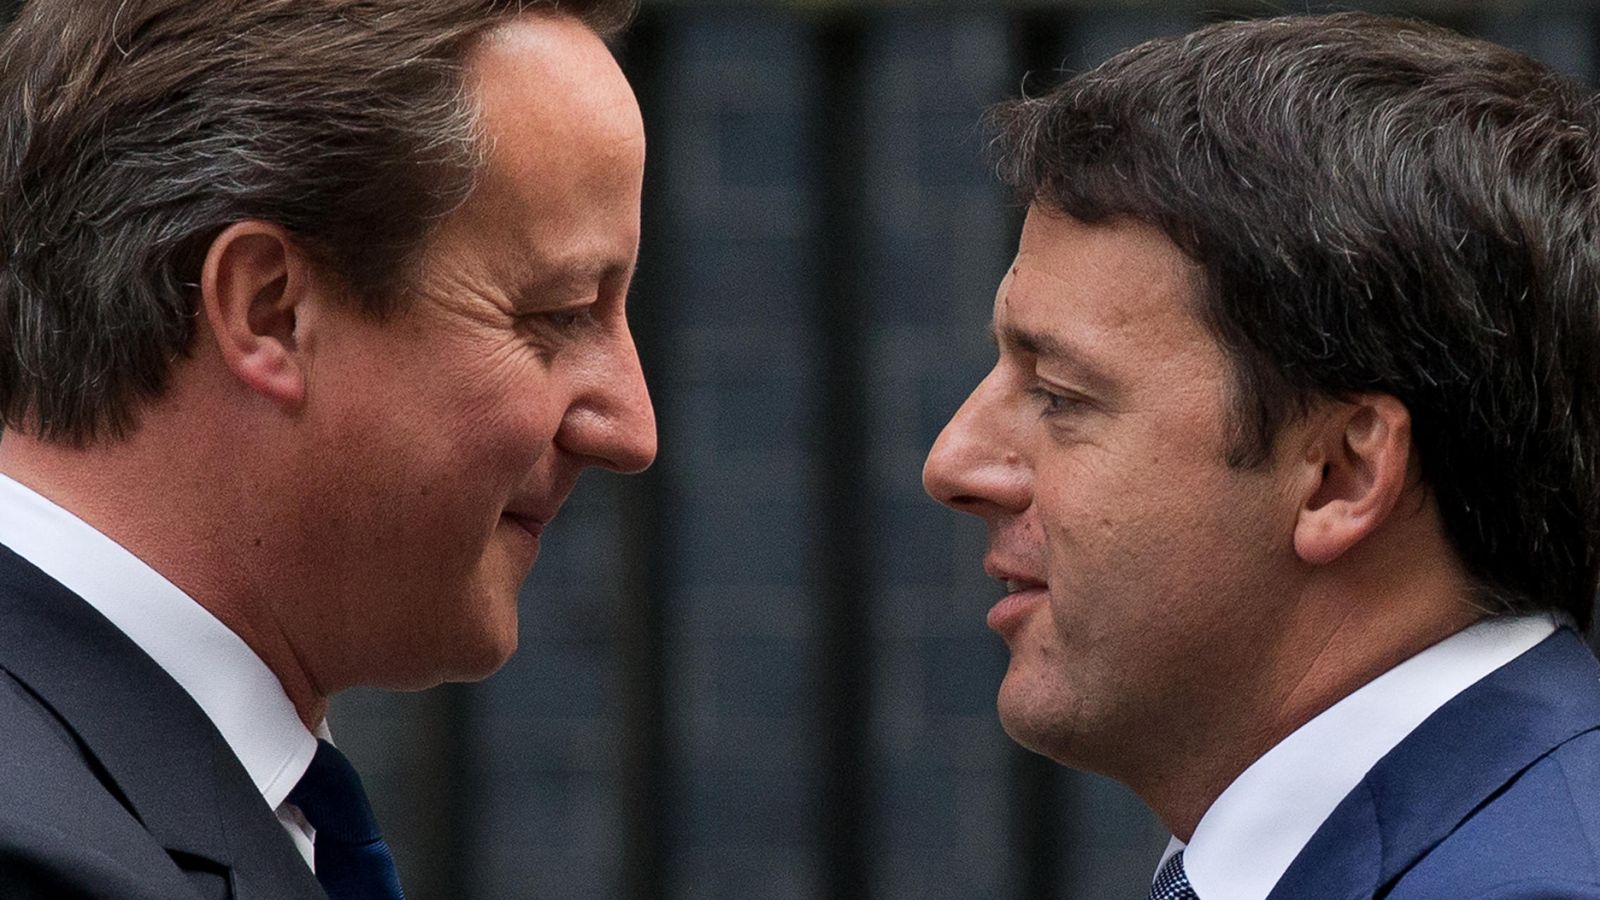 Foto: El ex primer ministro británico David Cameron junto al italiano, Matteo Renzi. (Gtres)